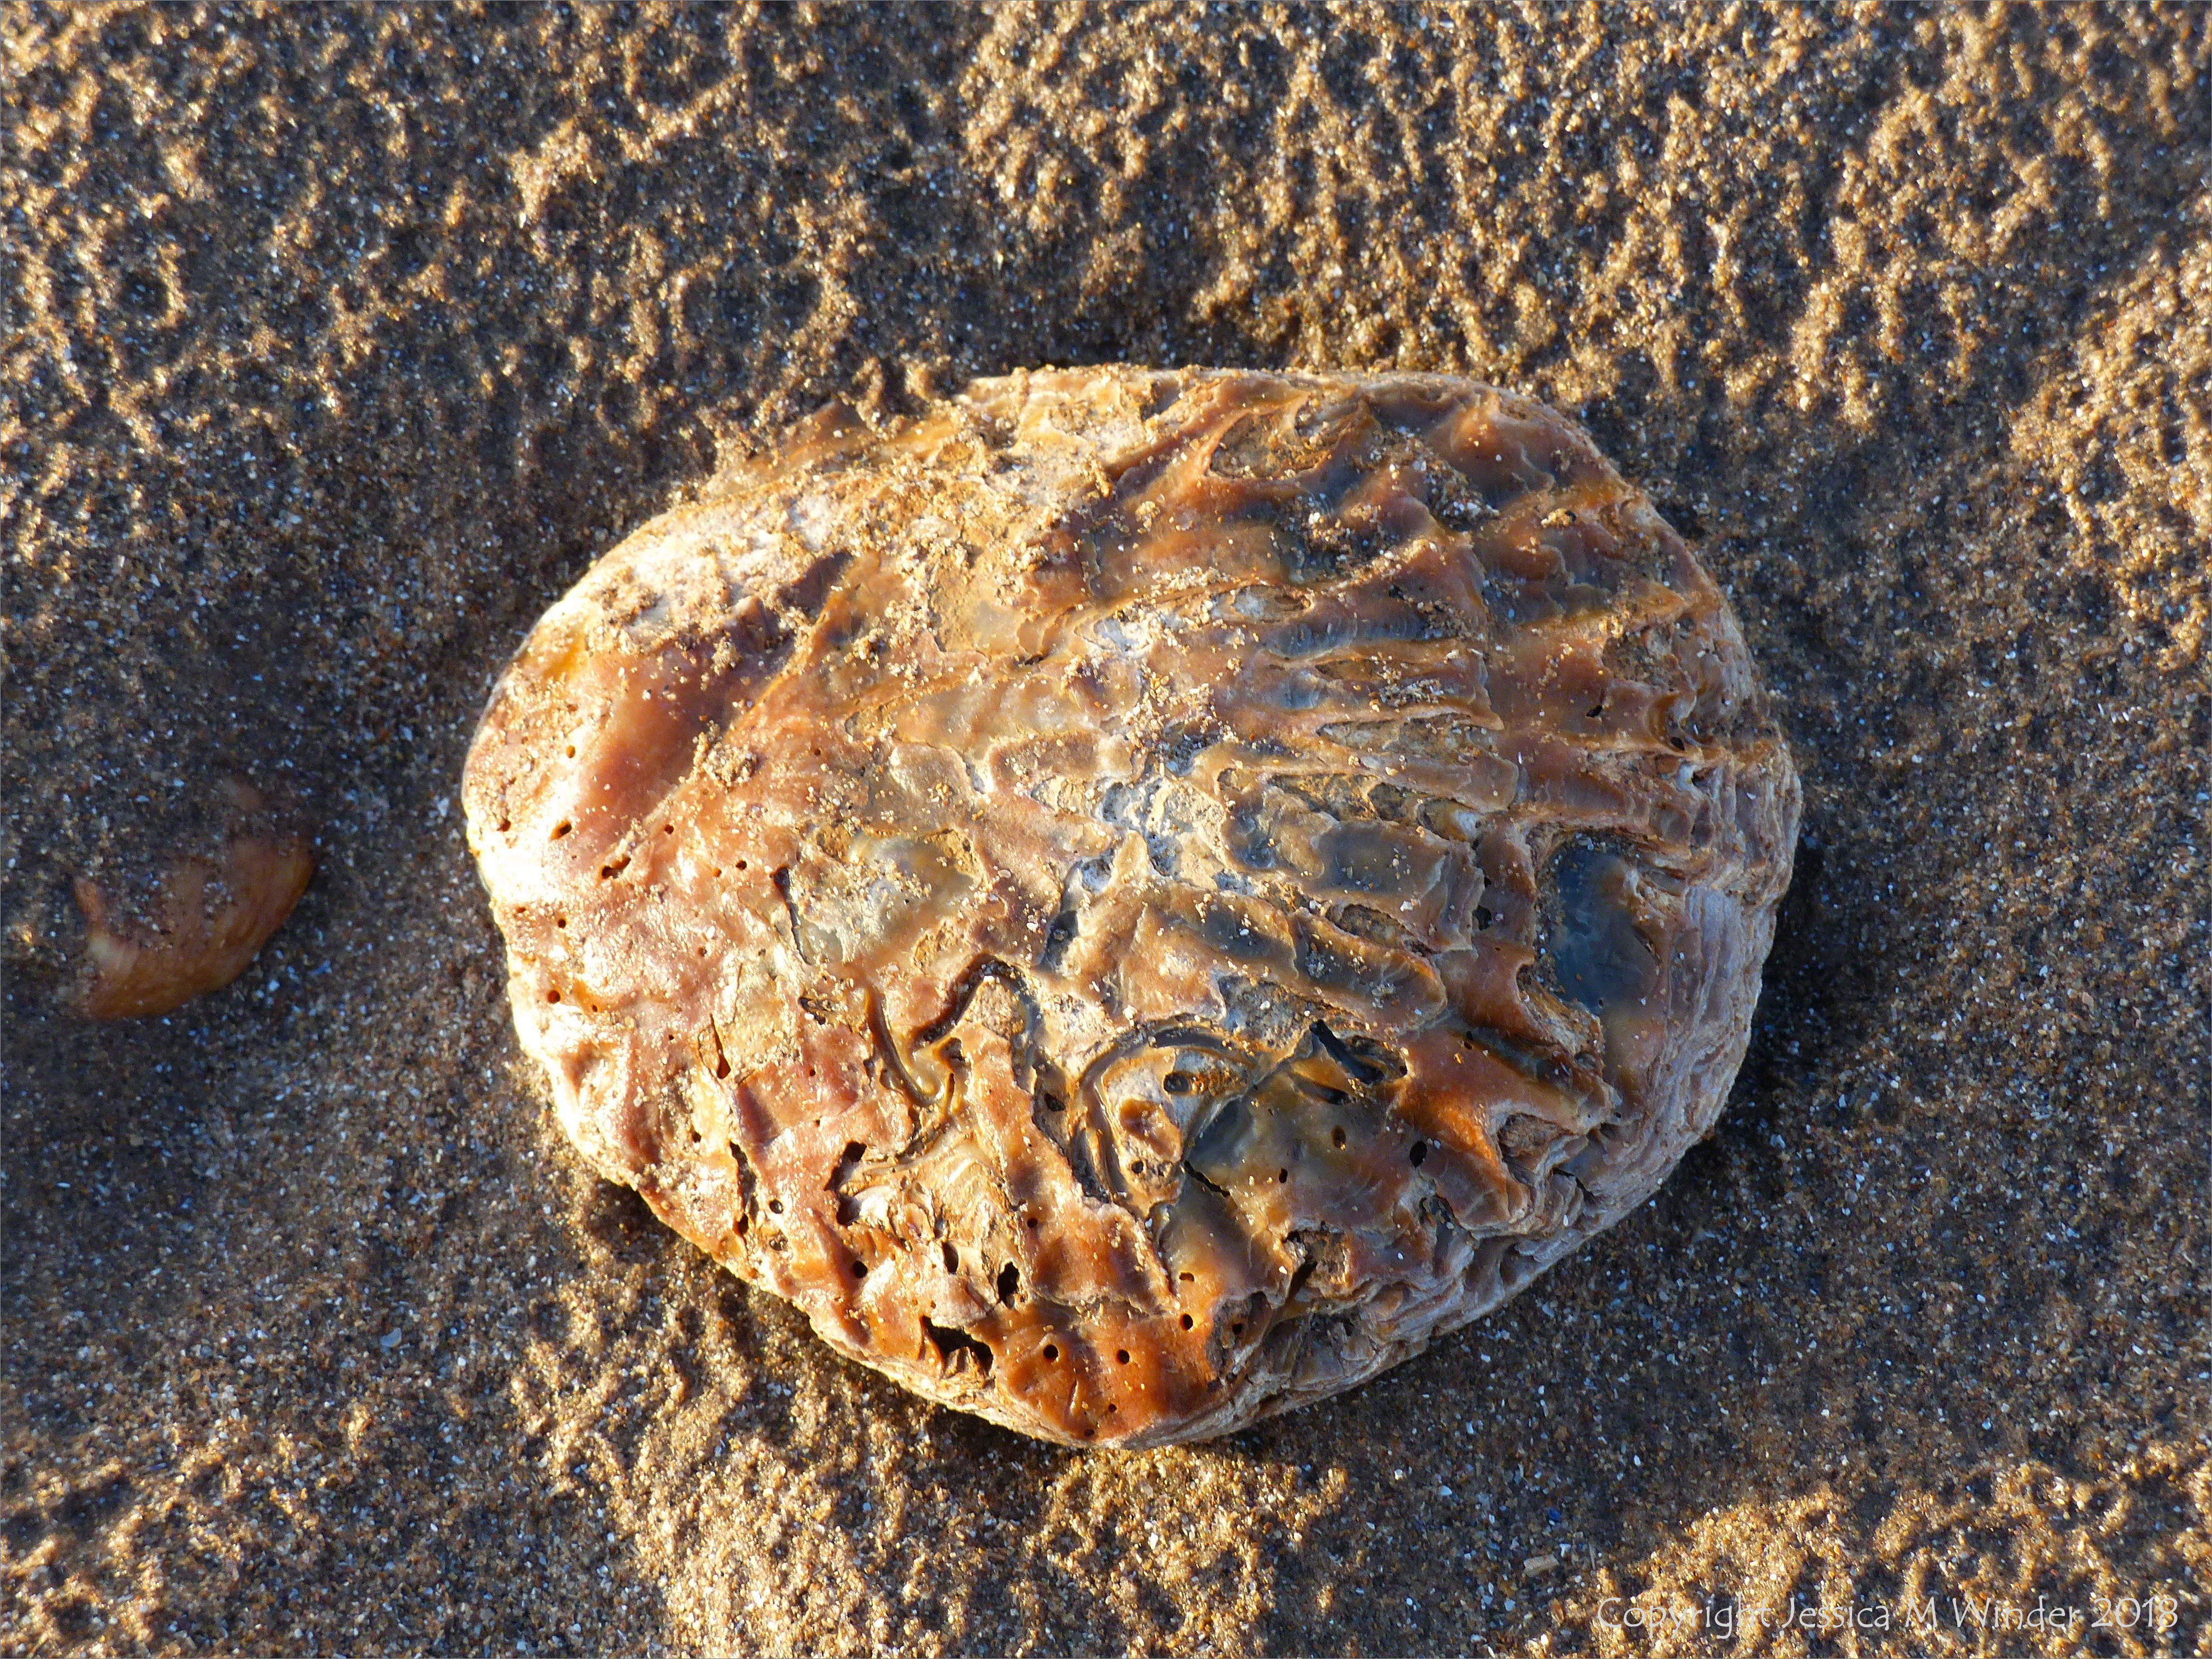 Oyster shell on beach sand